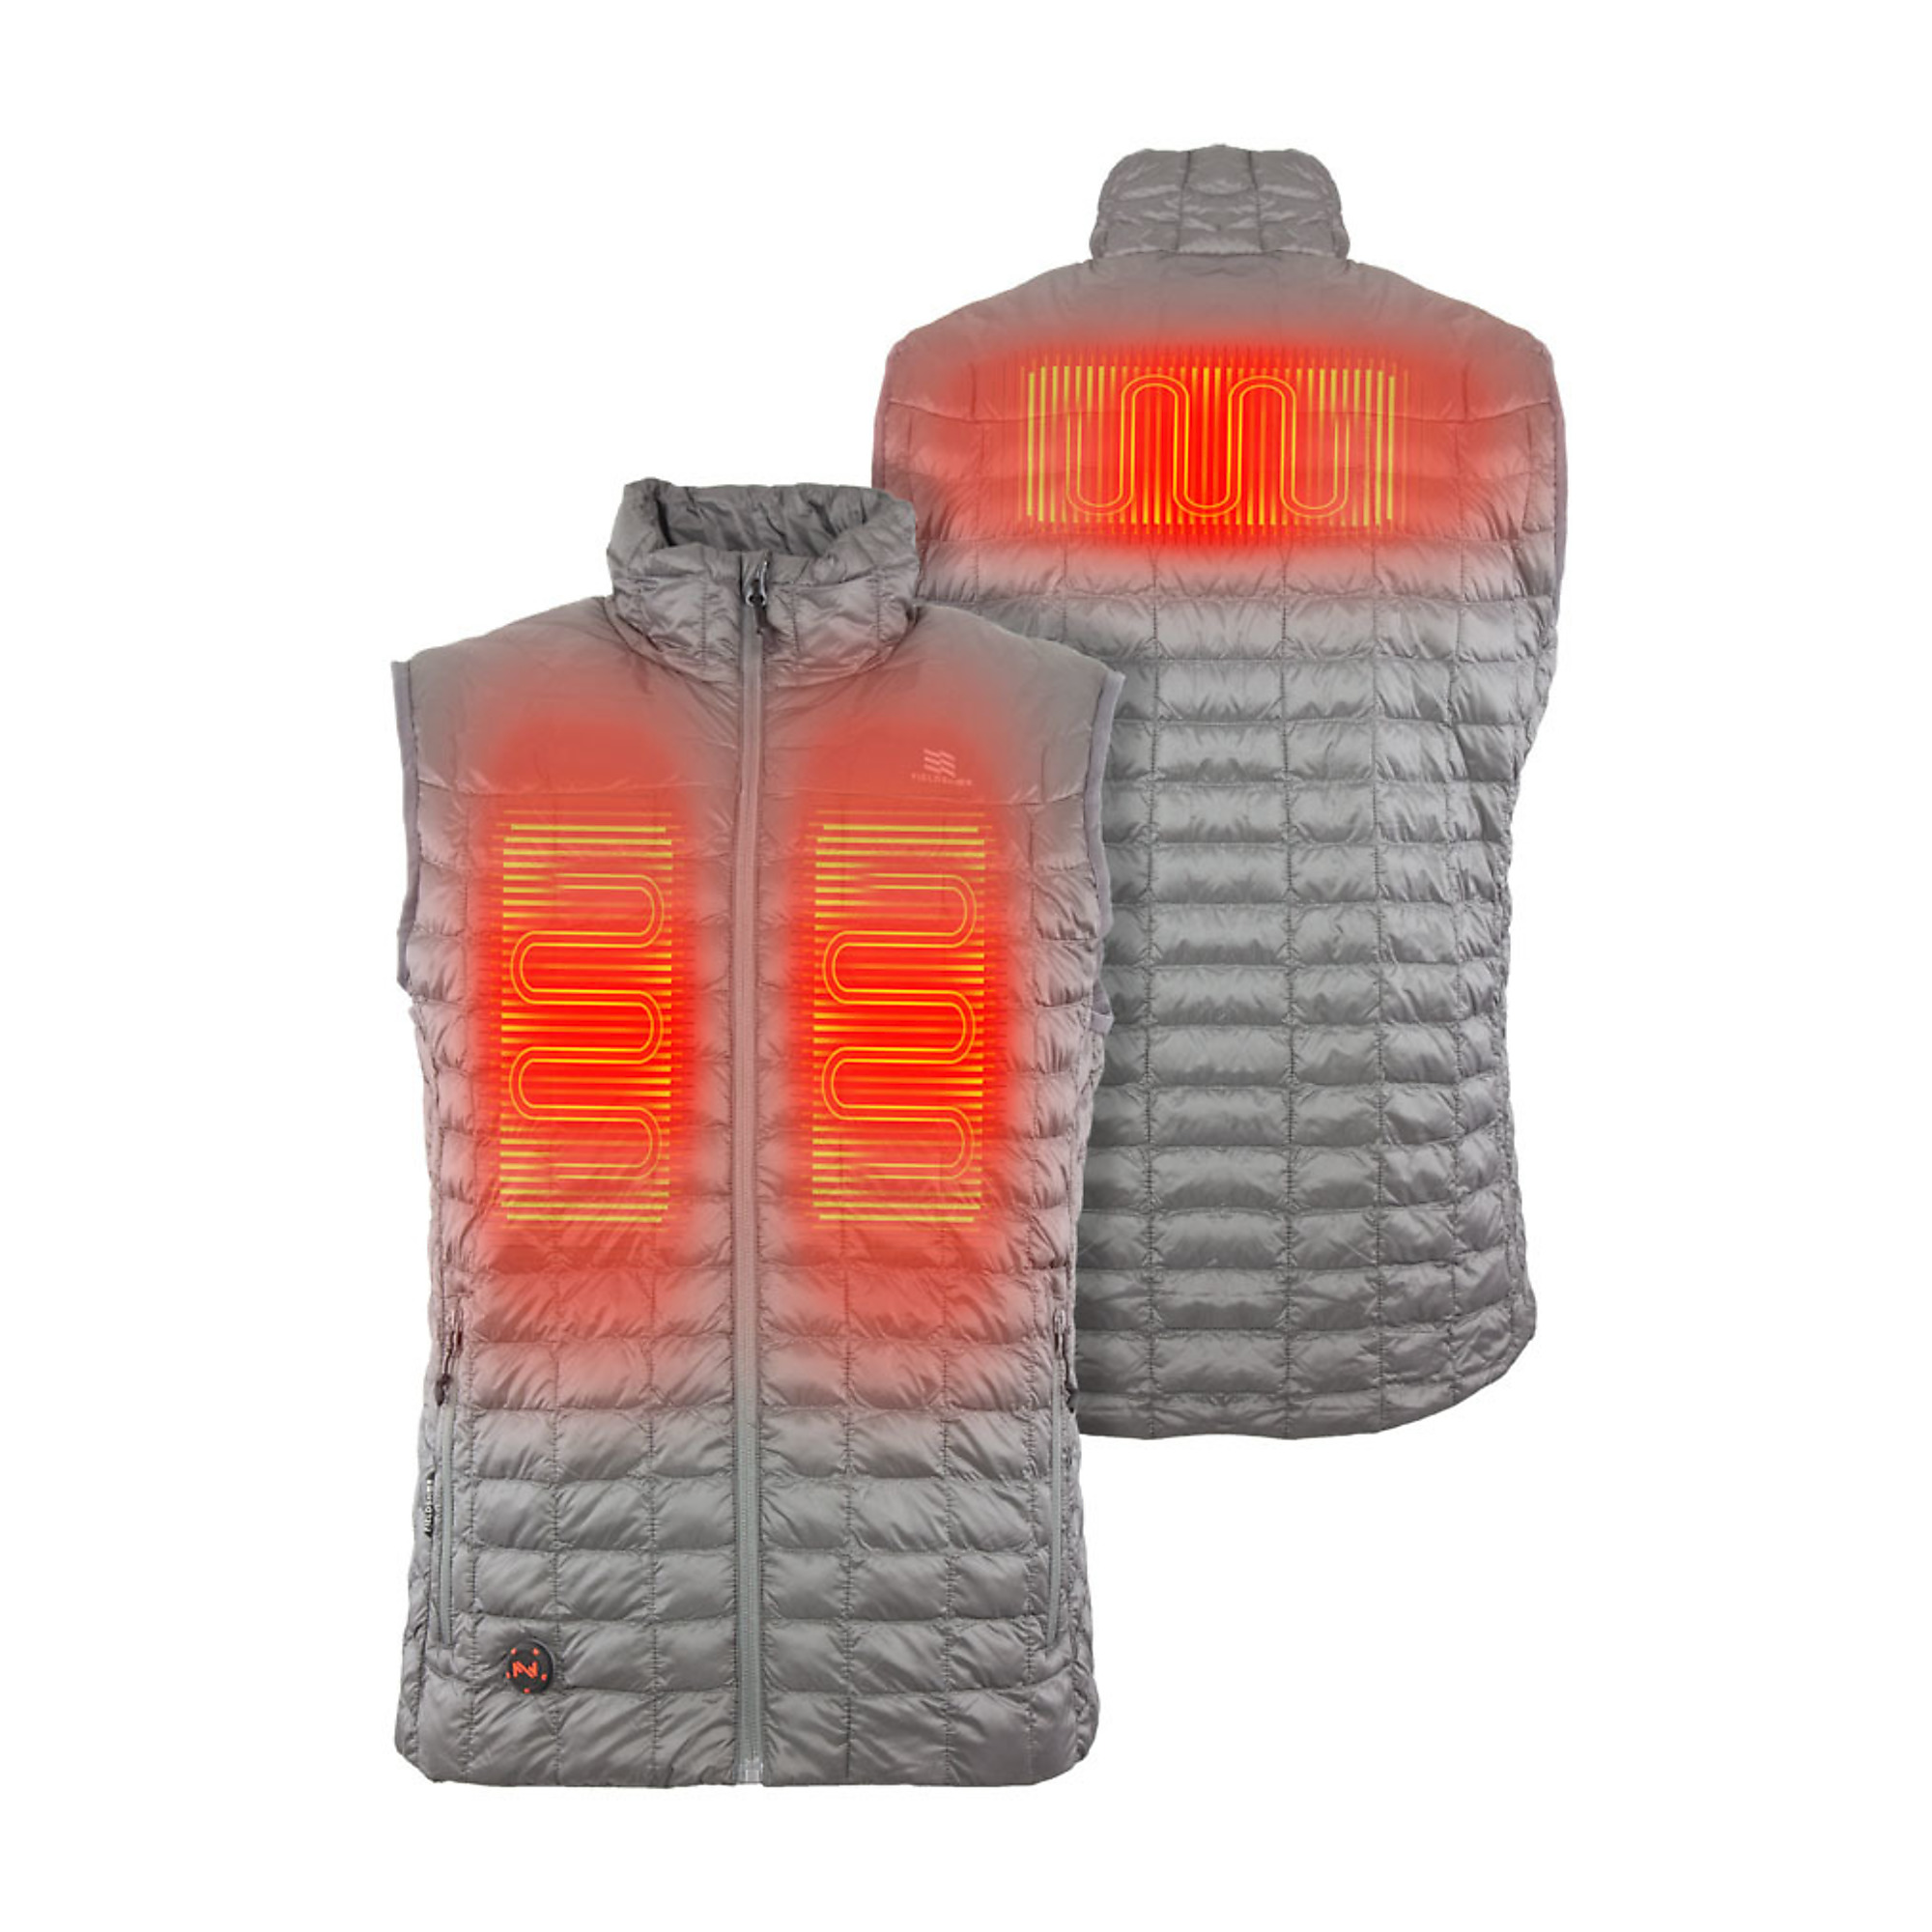 Fieldsheer, Men's Backcountry Heated Vest with 7.4v Battery, Size M, Color Grey, Model MWMV04320320